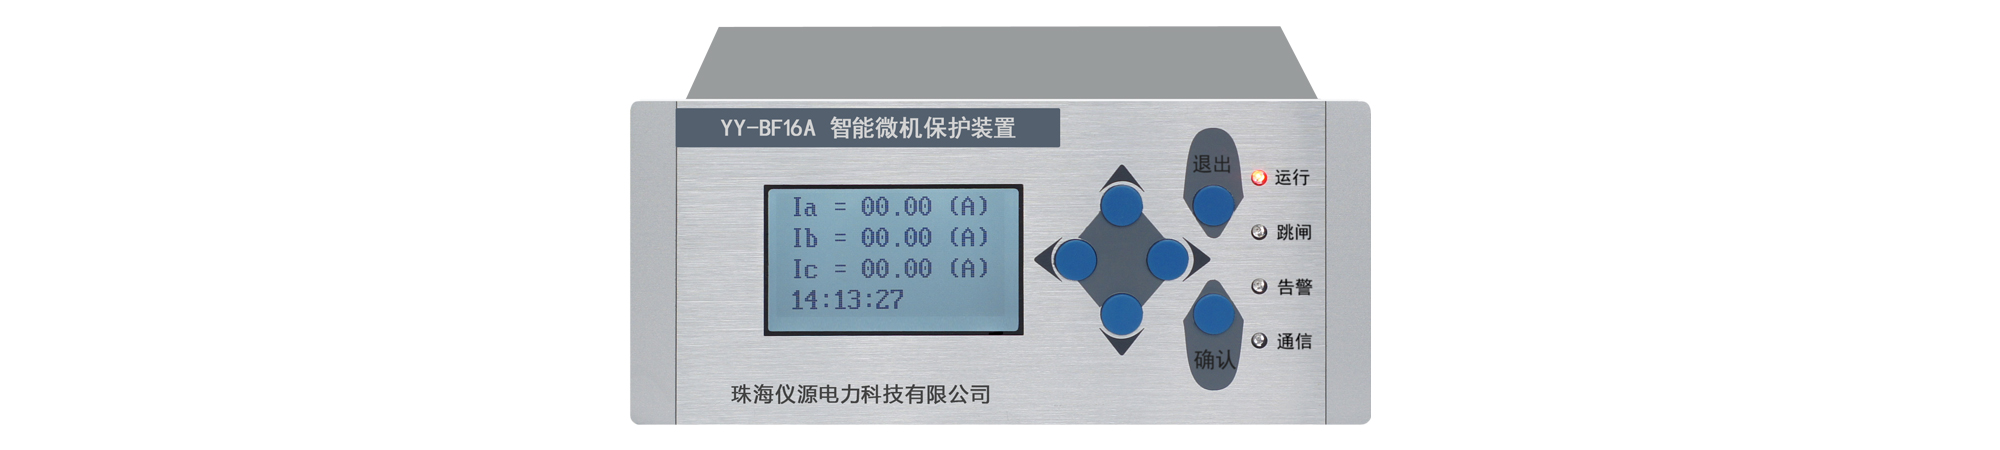 YY-BF16A 微机综合保护装置